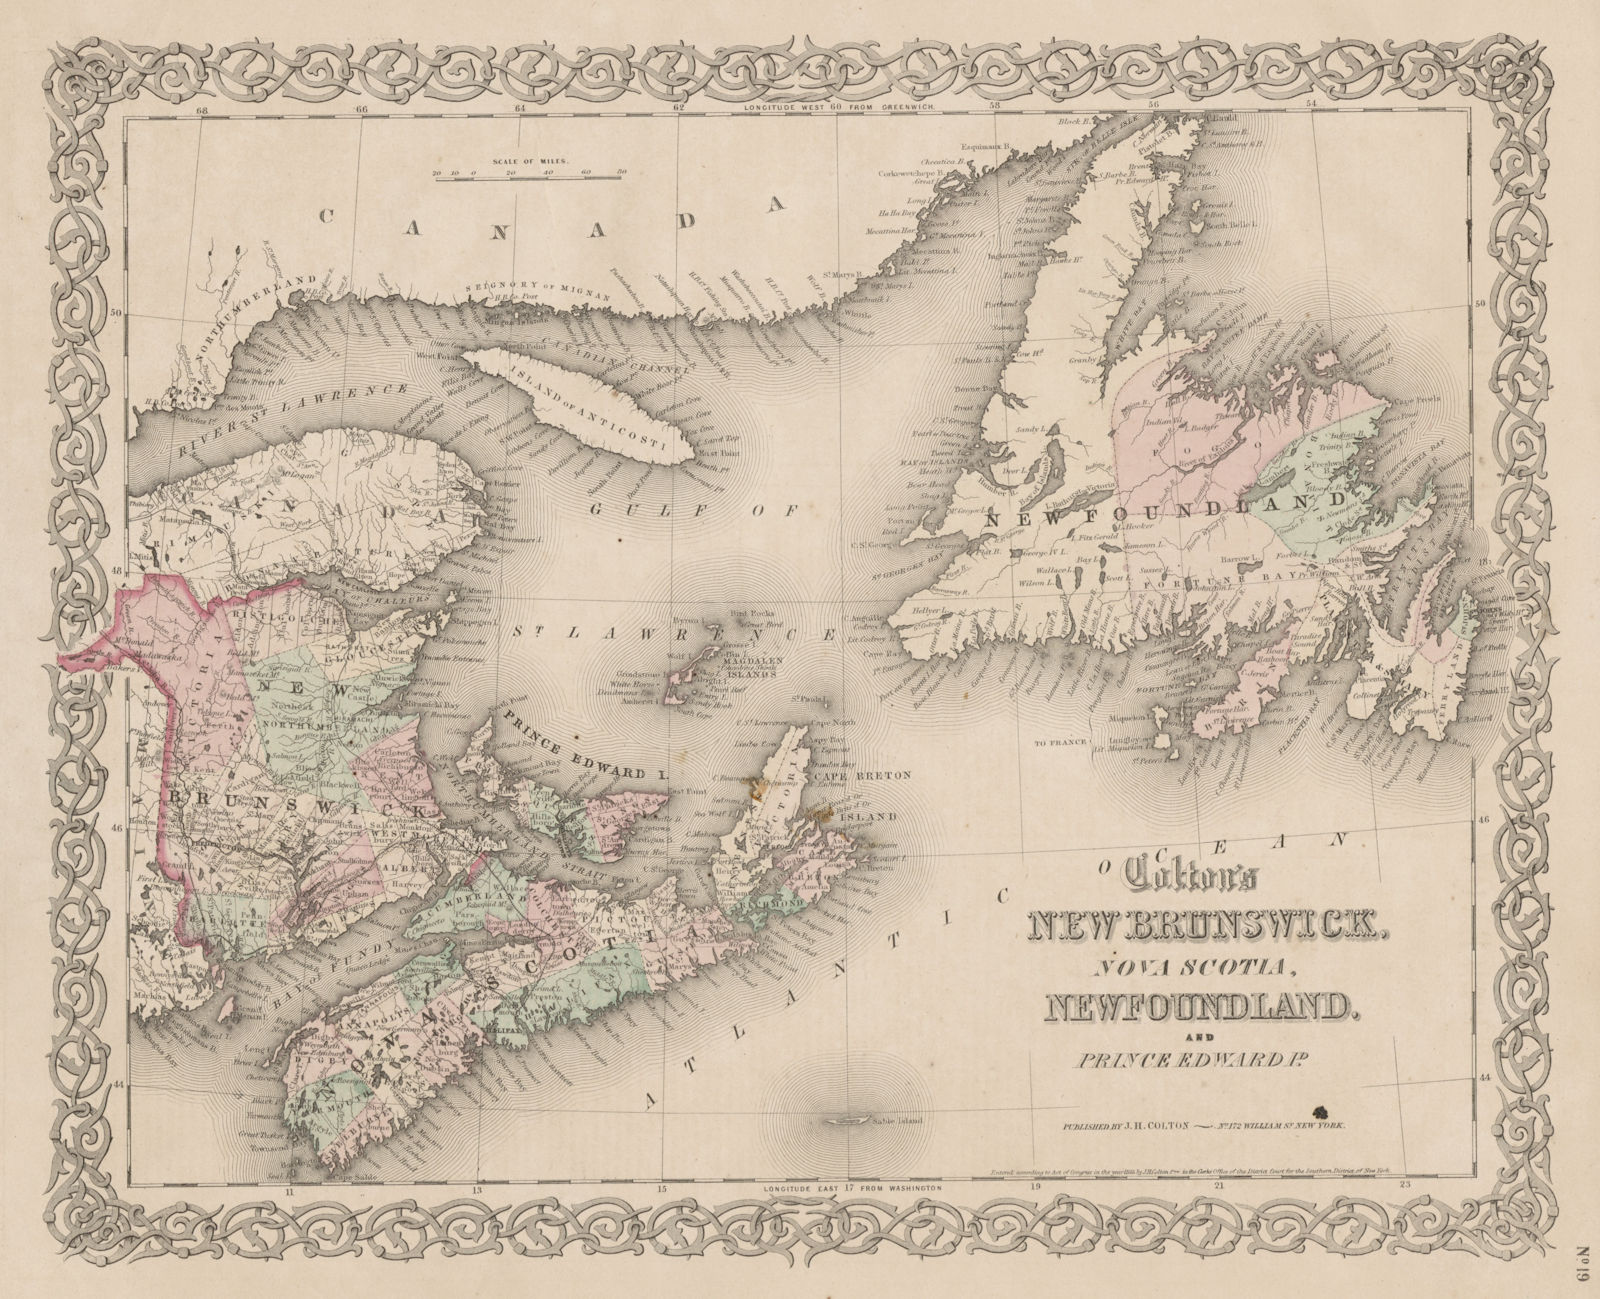 Associate Product Colton's New Brunswick, Nova Scotia, Newfoundland & Prince Edward Is. 1863 map